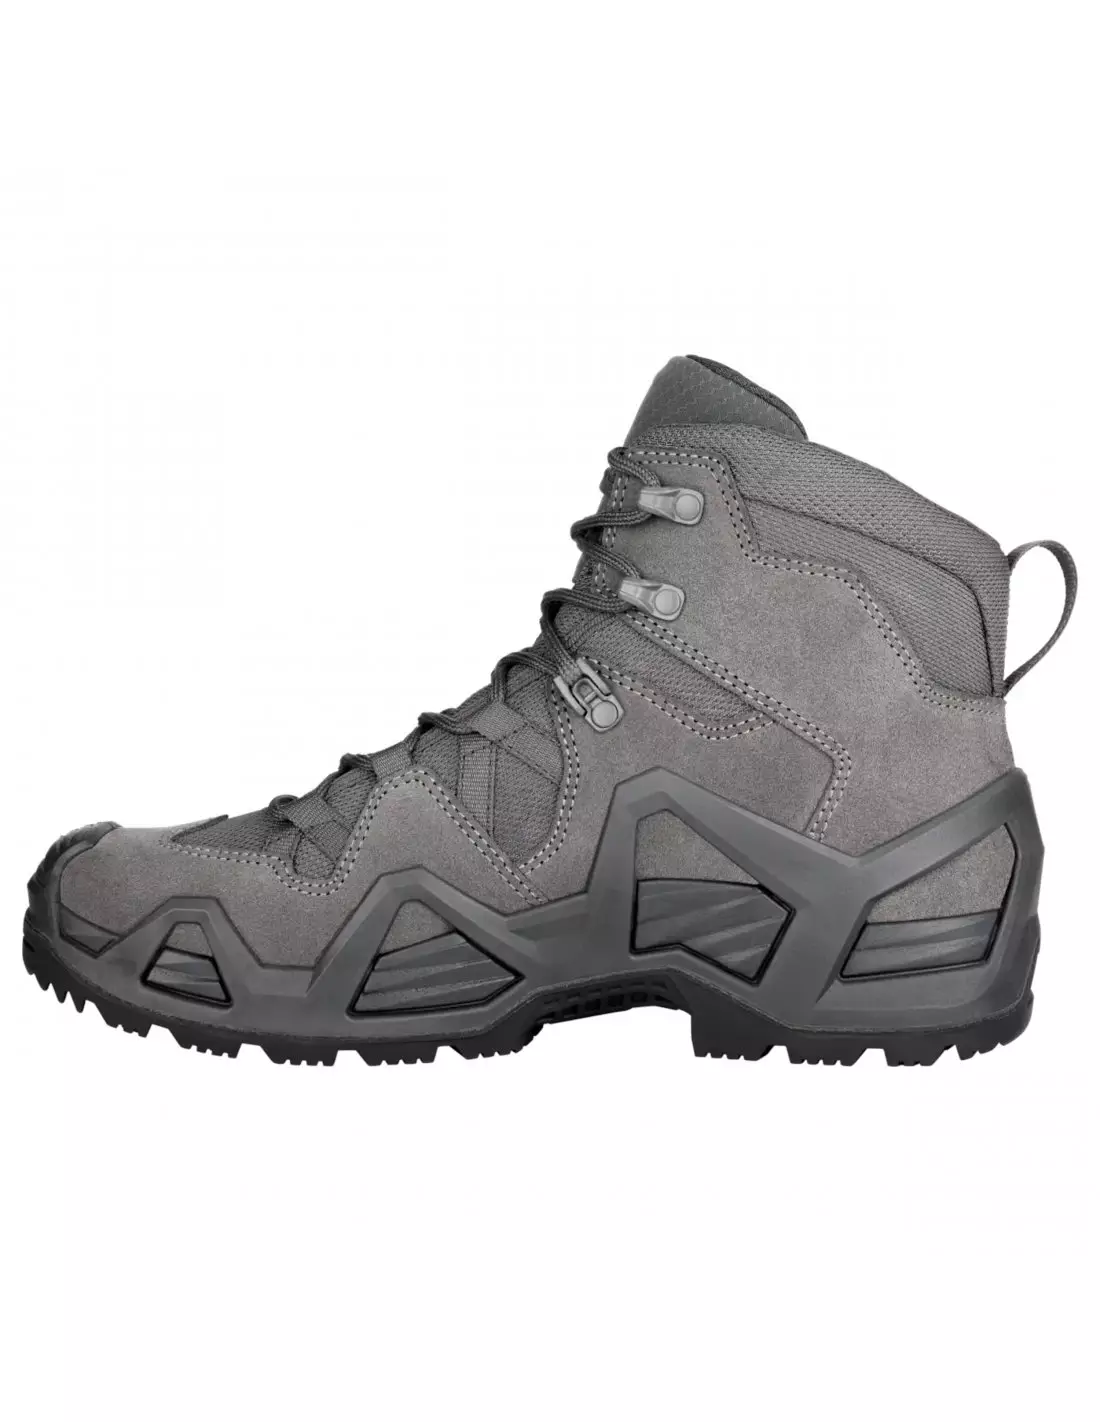 LOWA® ZEPHYR MK2 GTX MID Tactical Boots - Wolf Grey